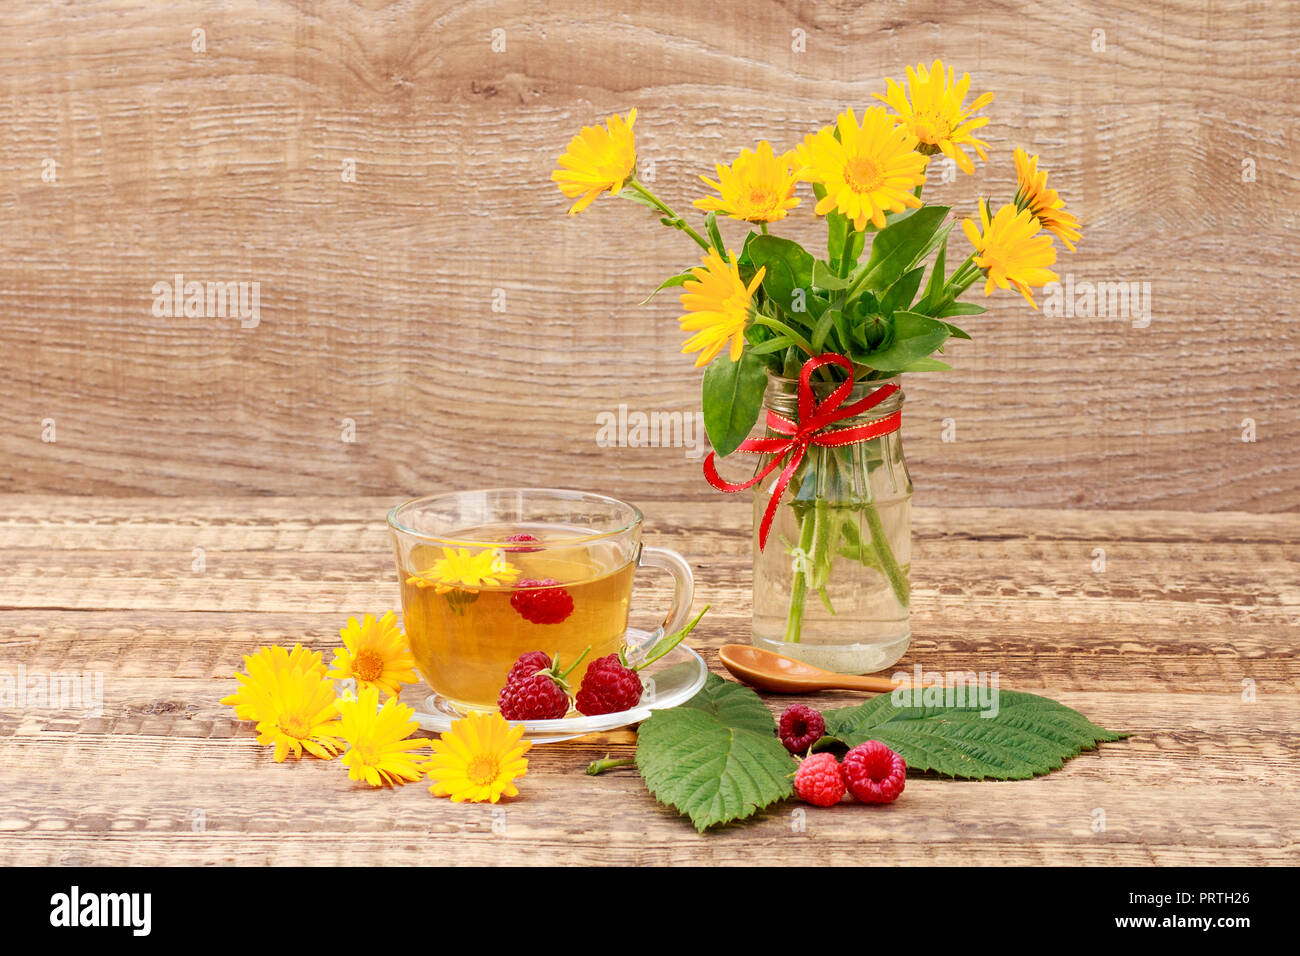 Glass cup of green tea with flowers of calendula and fresh raspberries, fresh bouquet of orange calendula in vase. Wooden boards background. Health-gi Stock Photo